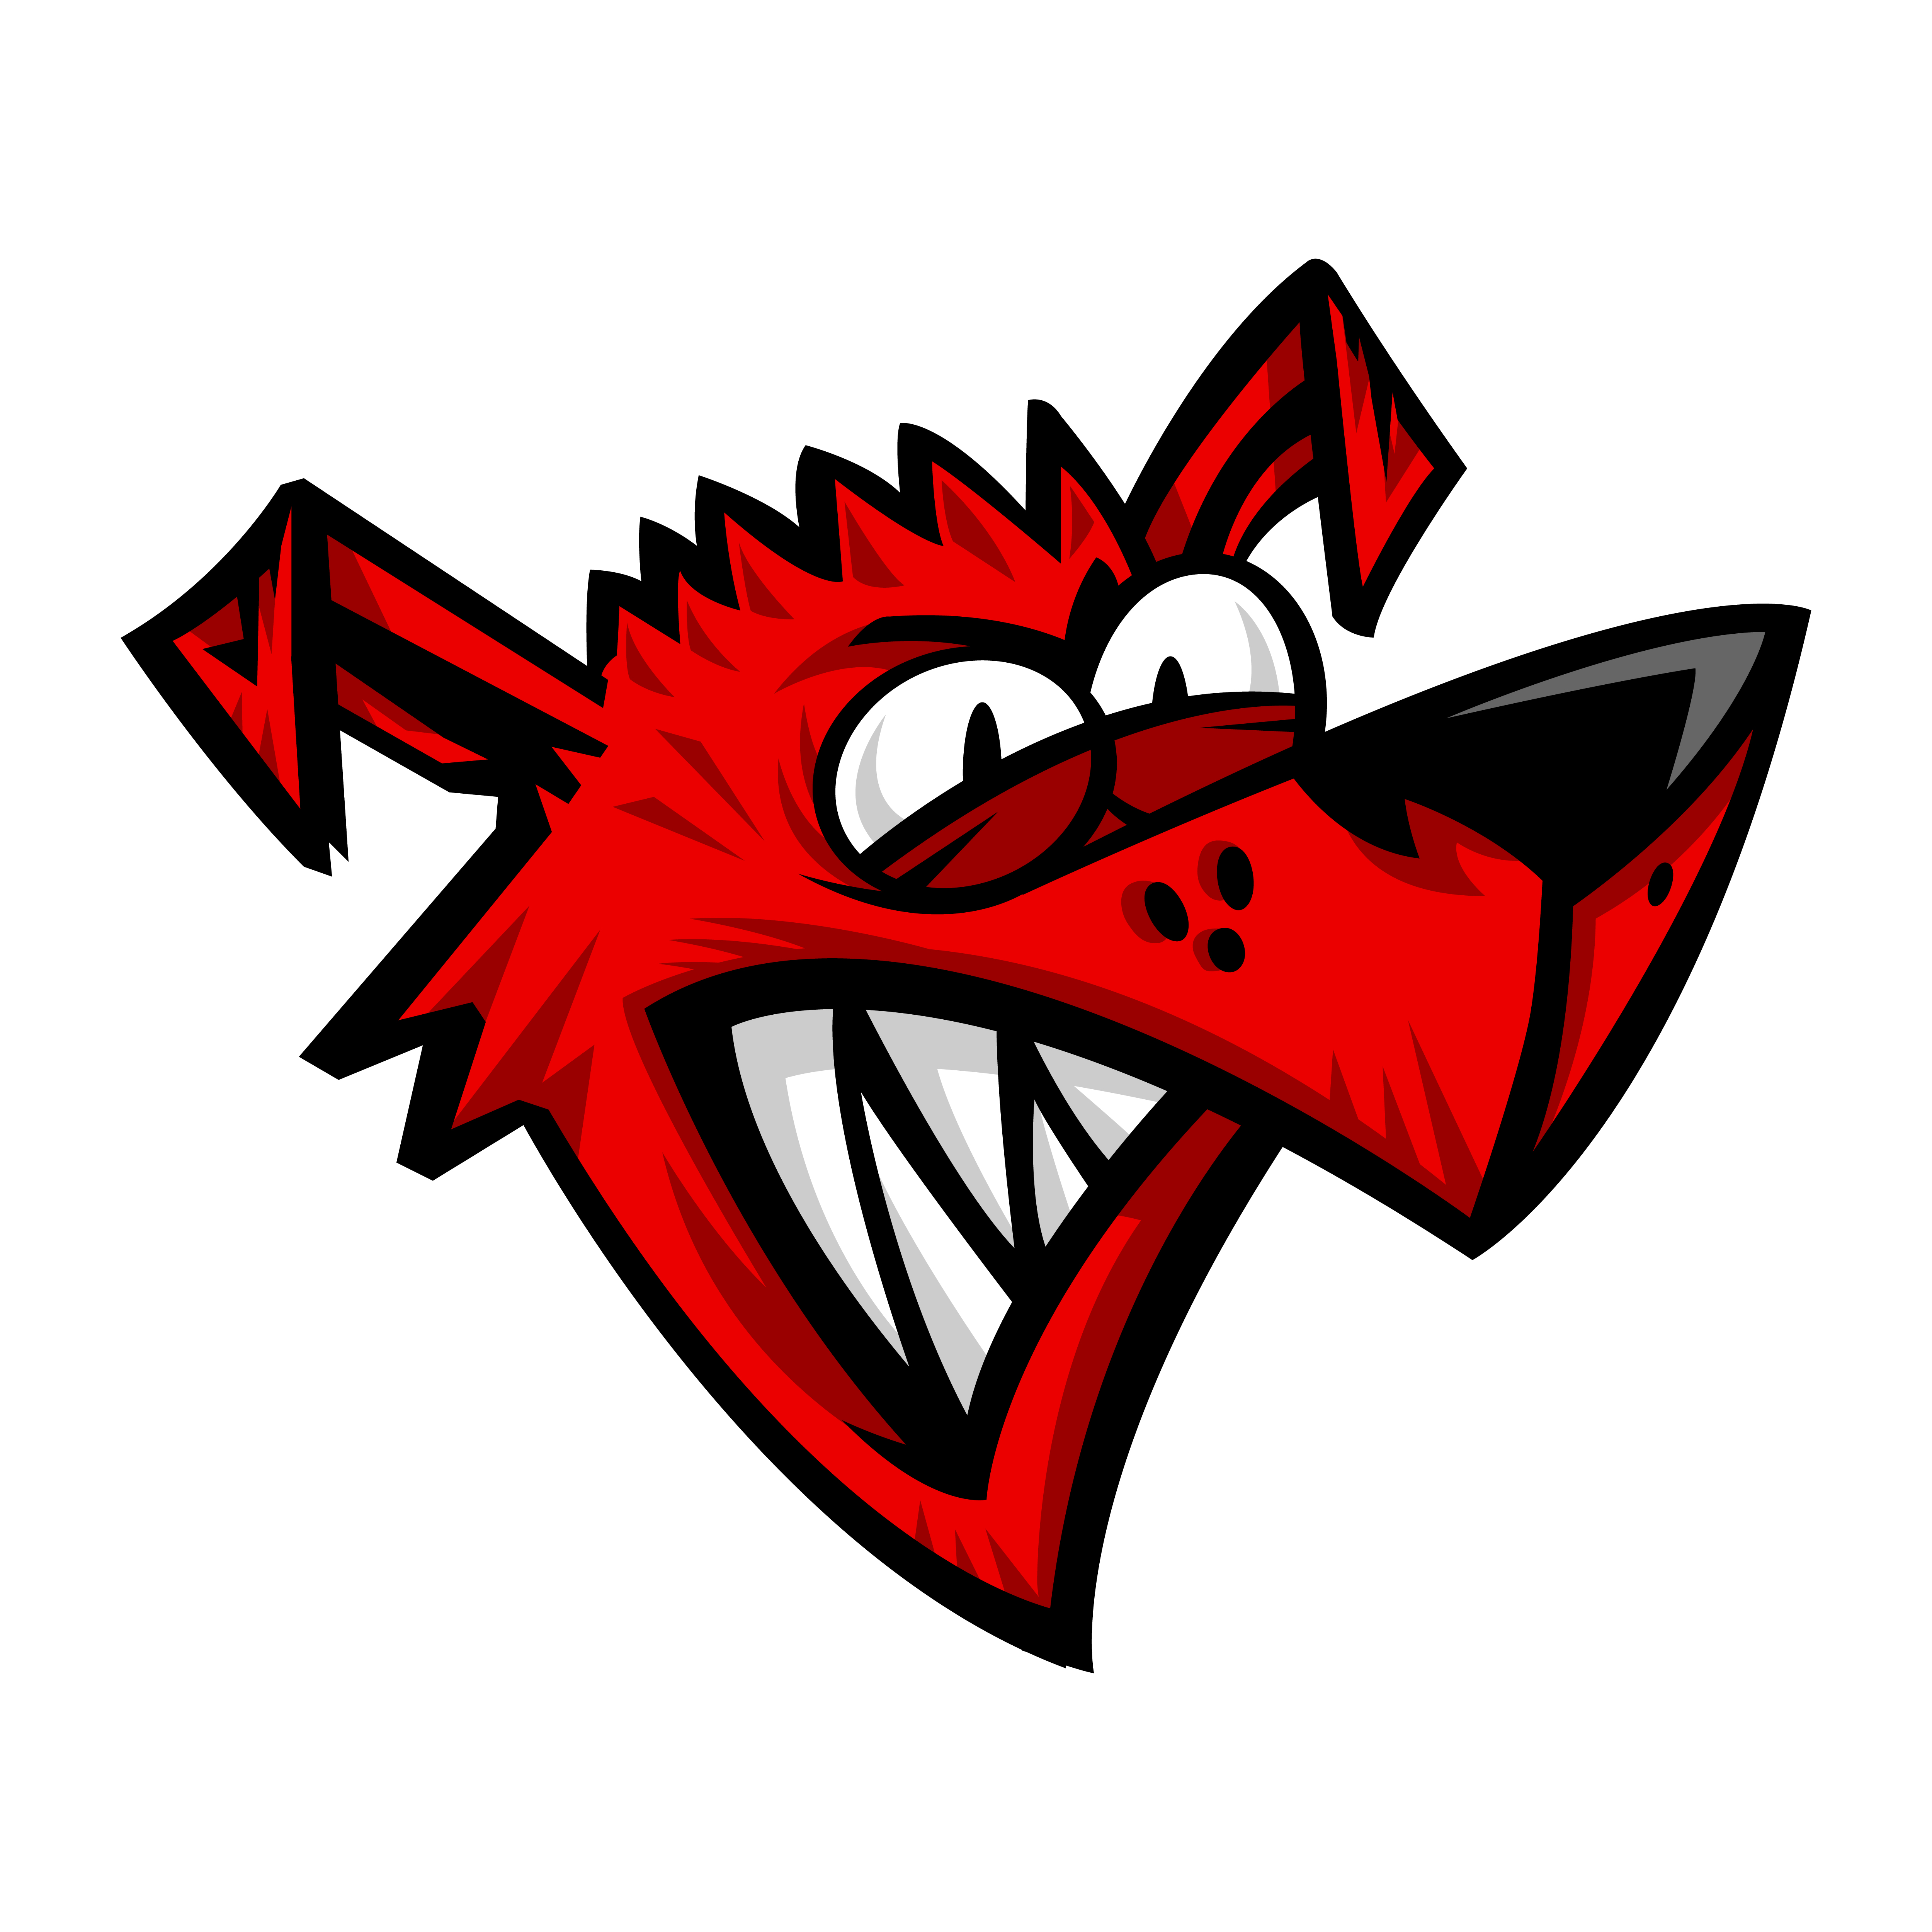 Angry dog cartoon vector illustration 545020 - Download Free Vectors